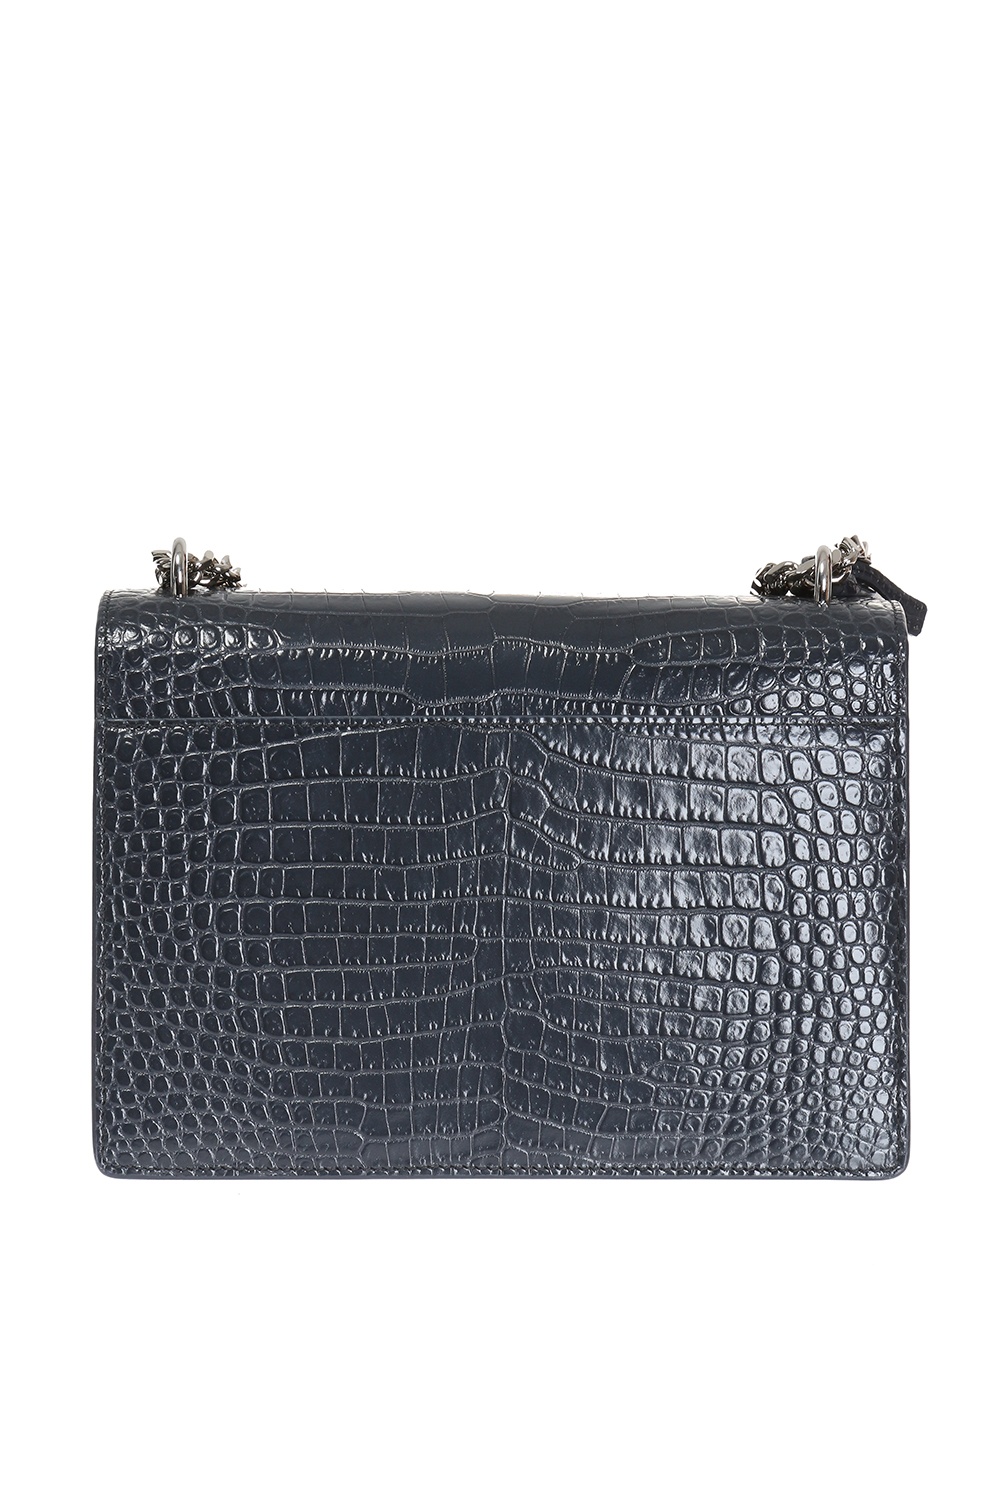 Yves Saint Laurent Sunset Crocodile Leather Wallet